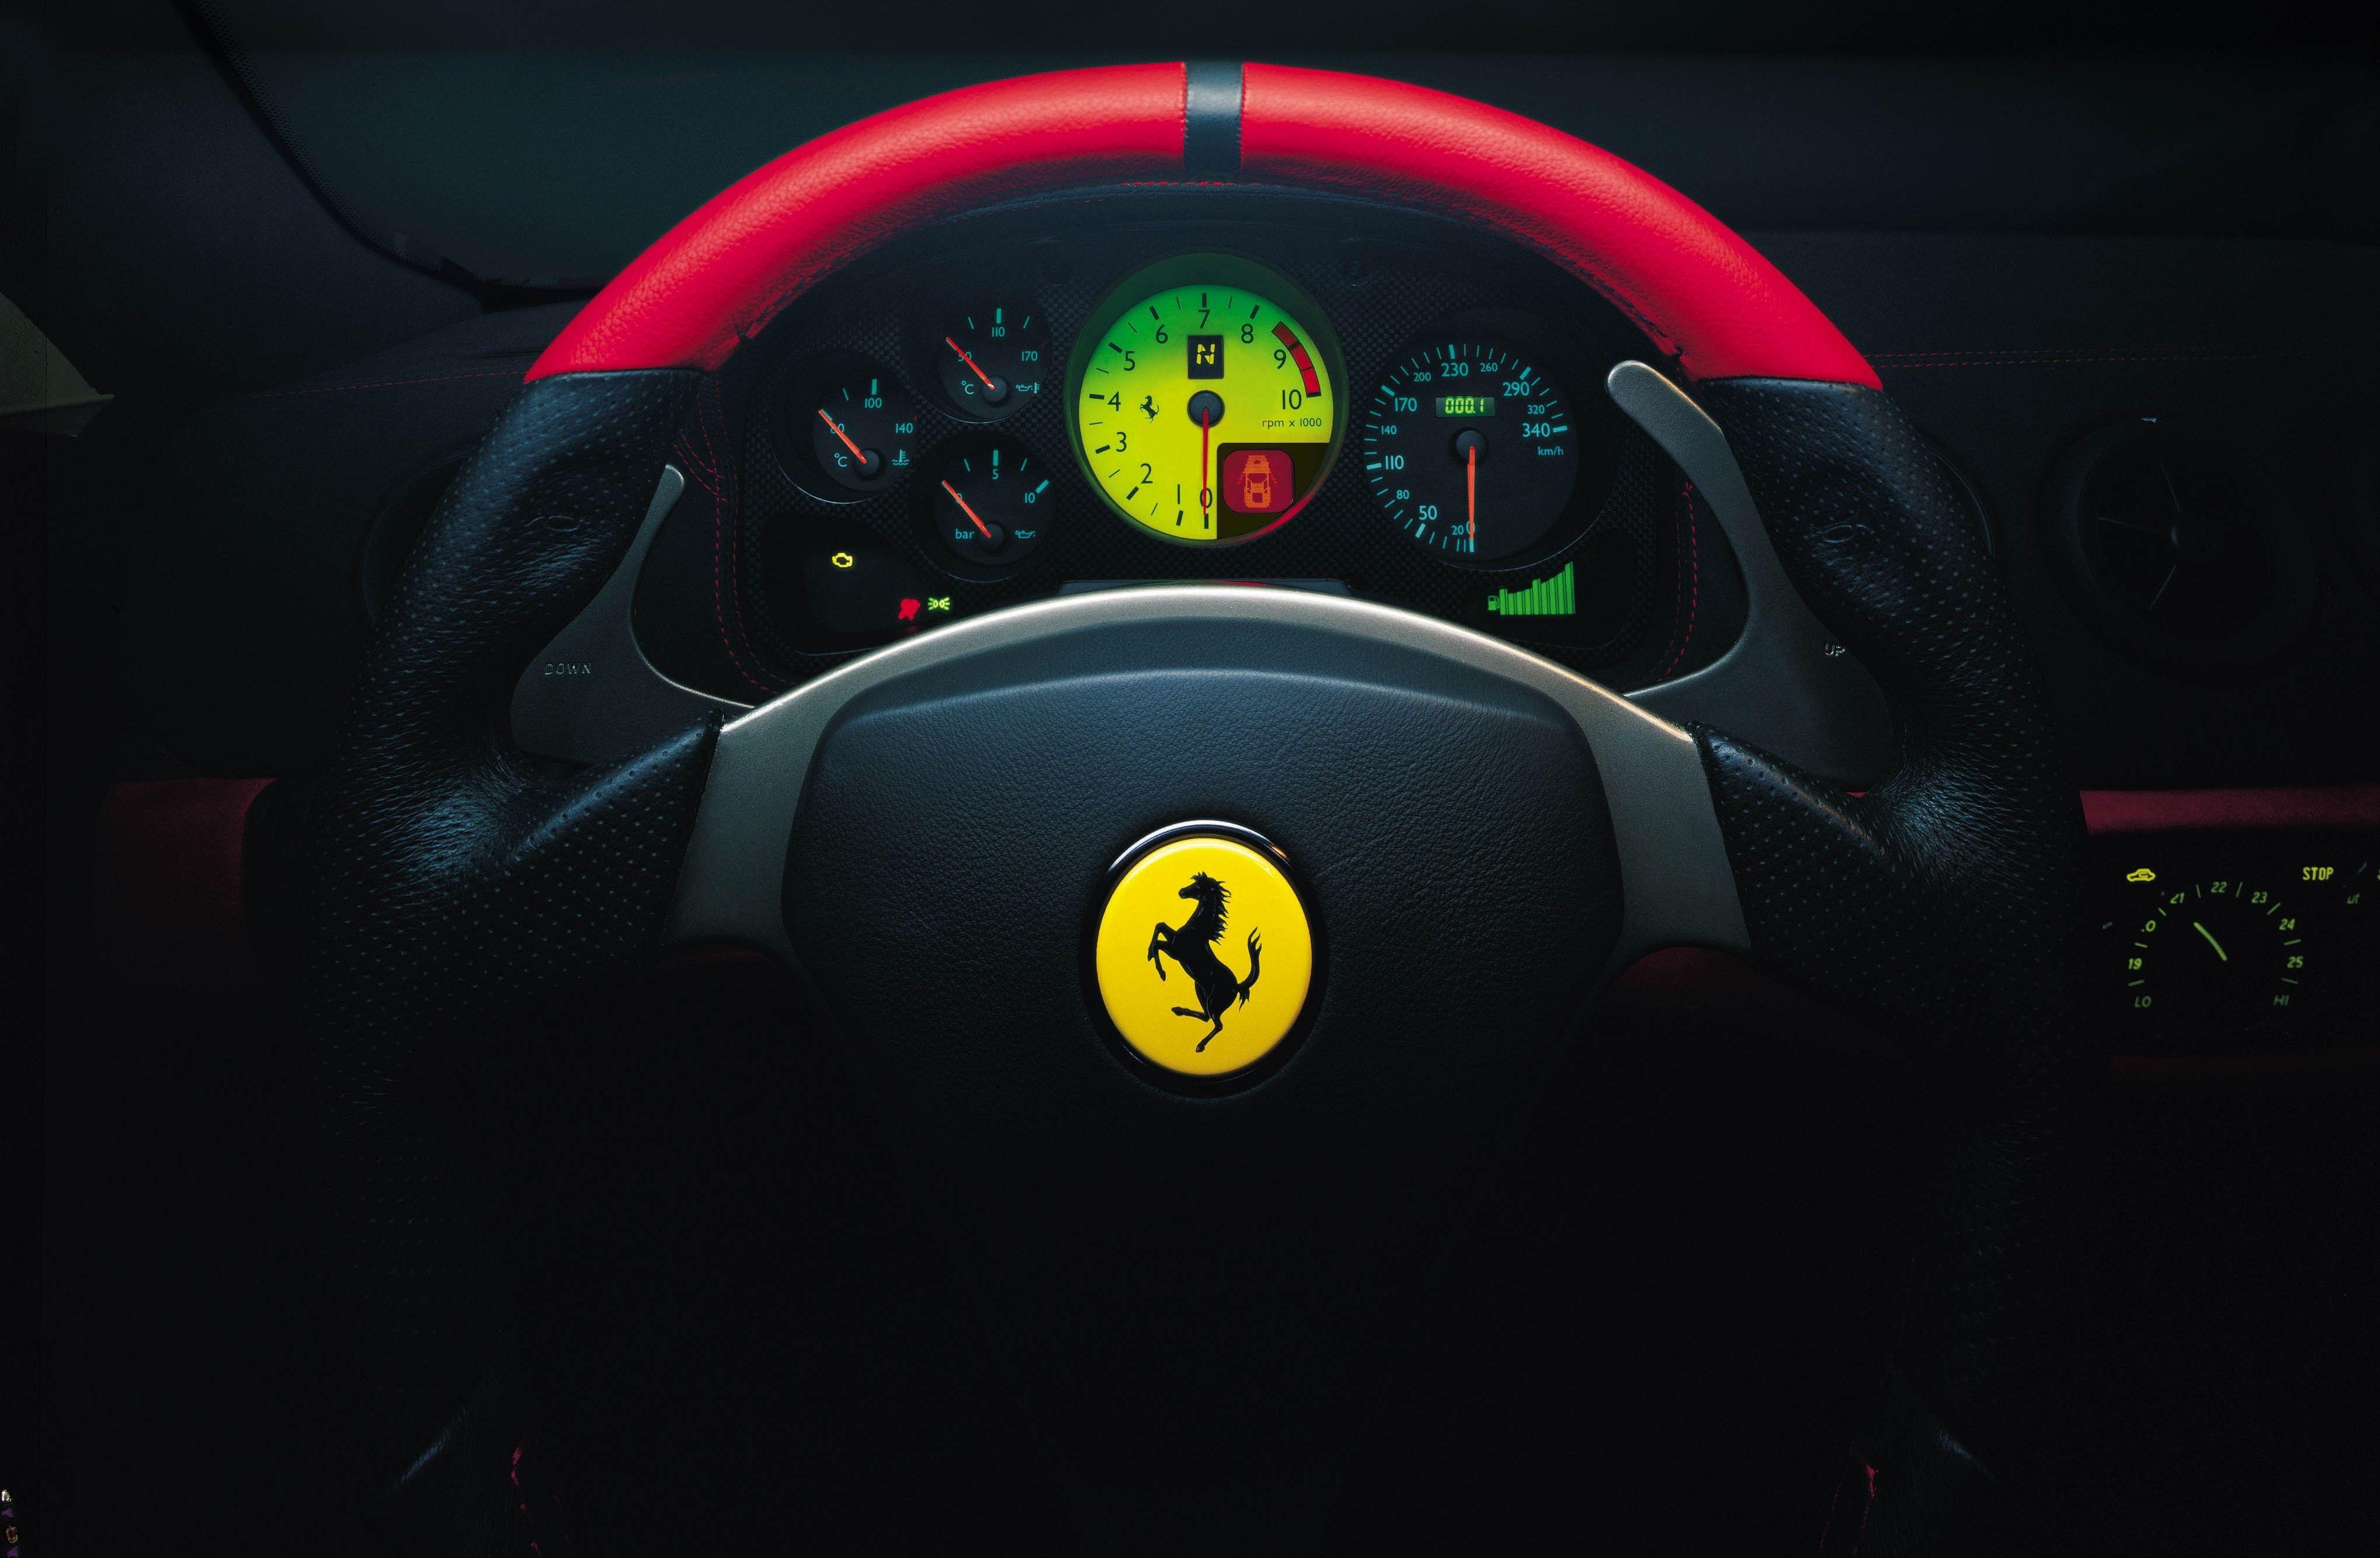 4K Ultra HD Ferrari Wallpaper and Background Image